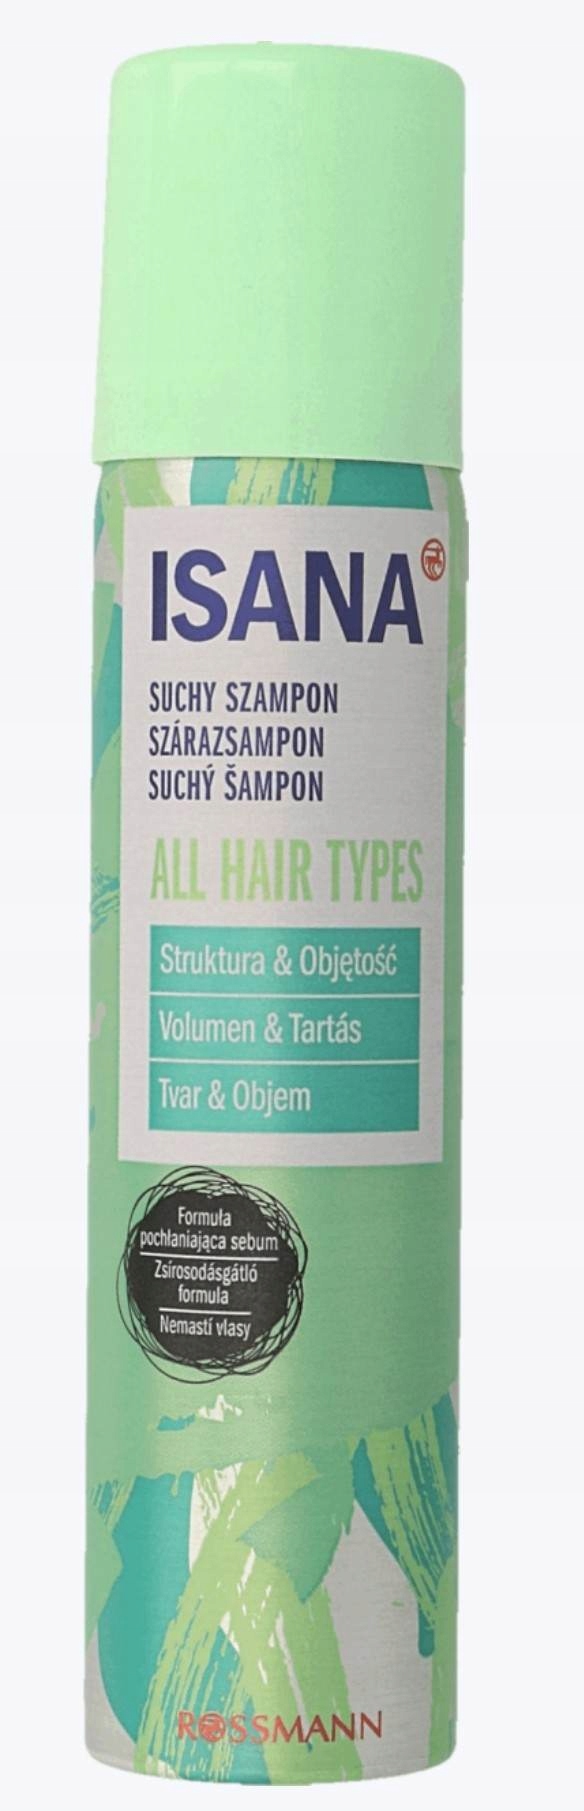 isana suchy szampon helles hair